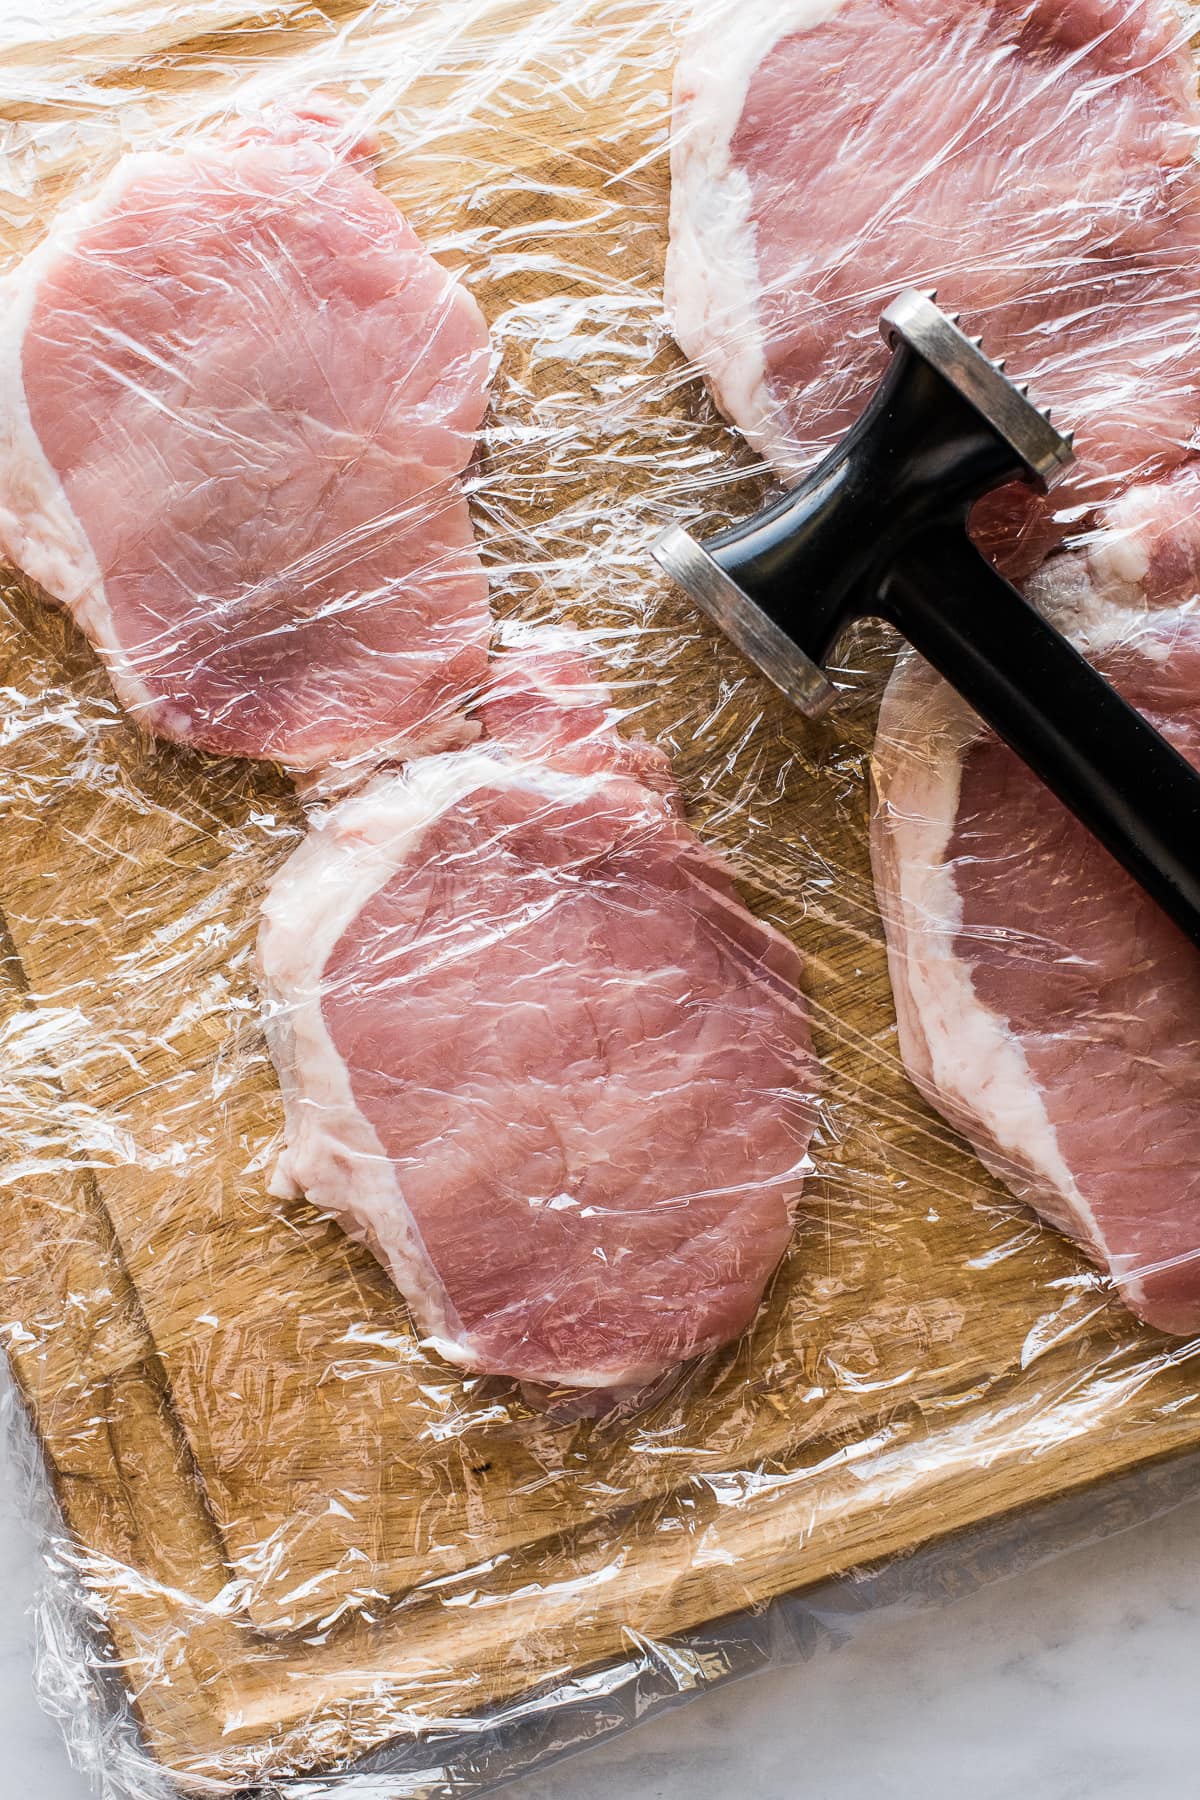 Boneless pork chops on a cutting board with a meat hammer.